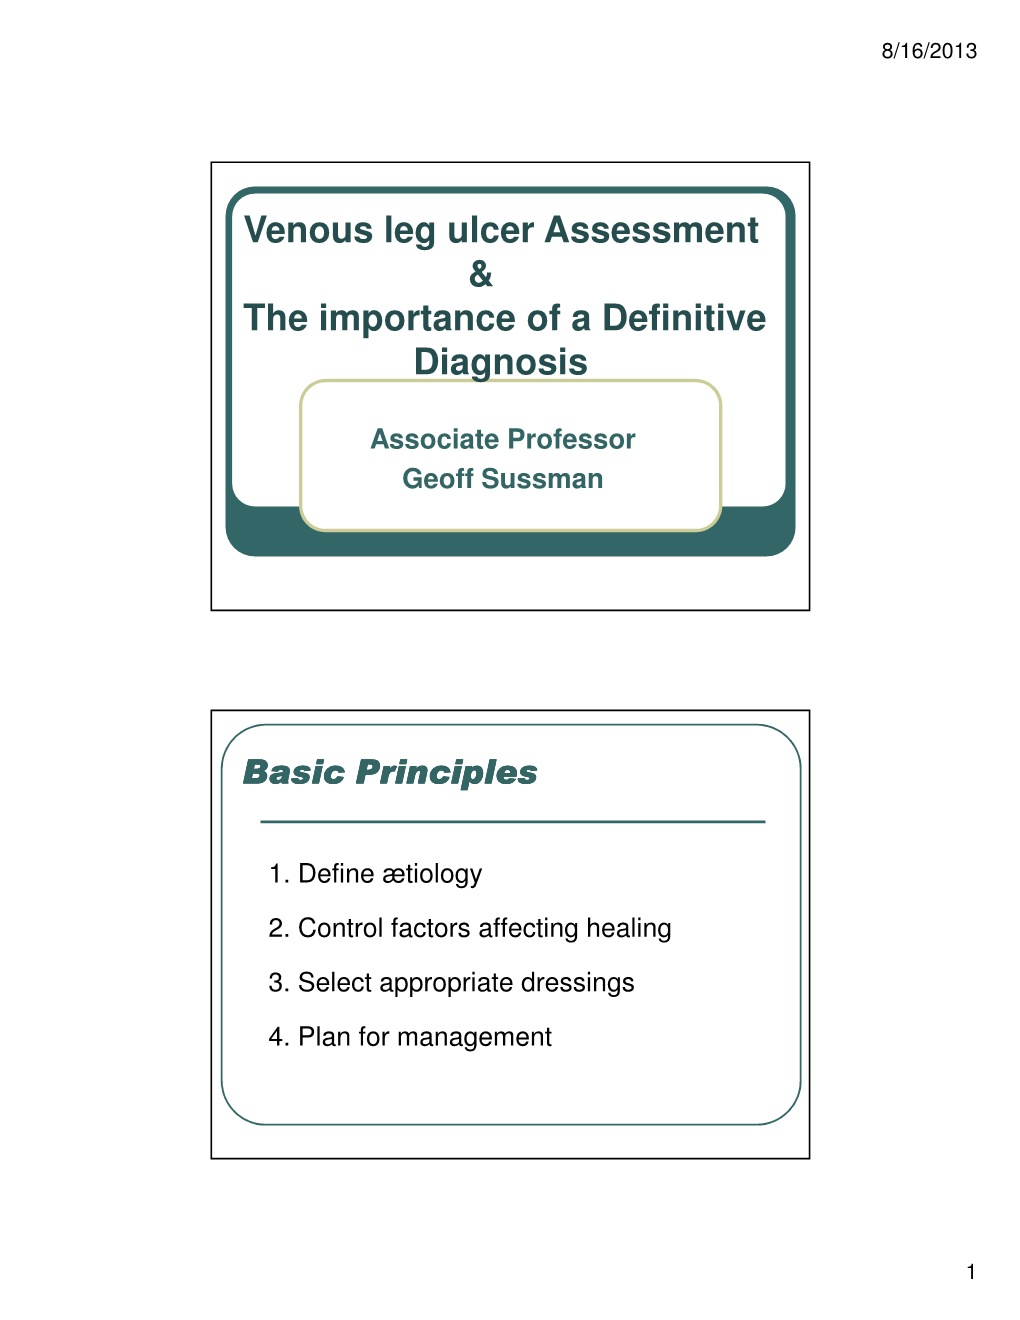 Venous Leg Ulcer Assessment & the Importance of a Definitive Diagnosis